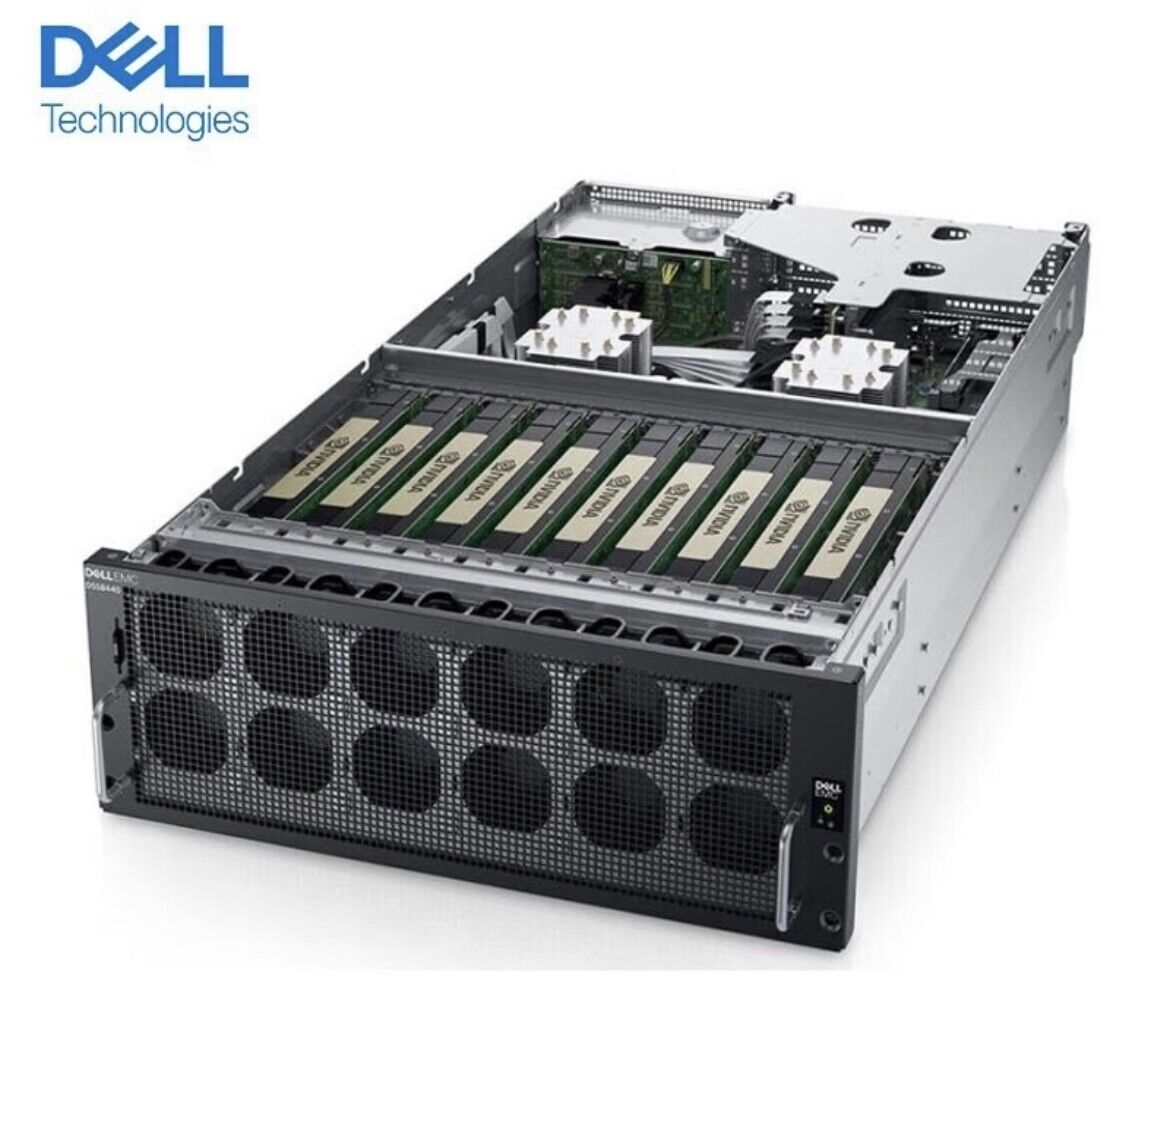 DELL Dell DSS 8440 Ten Card Server Deep Learning AI AI 4U 2000W redundancy